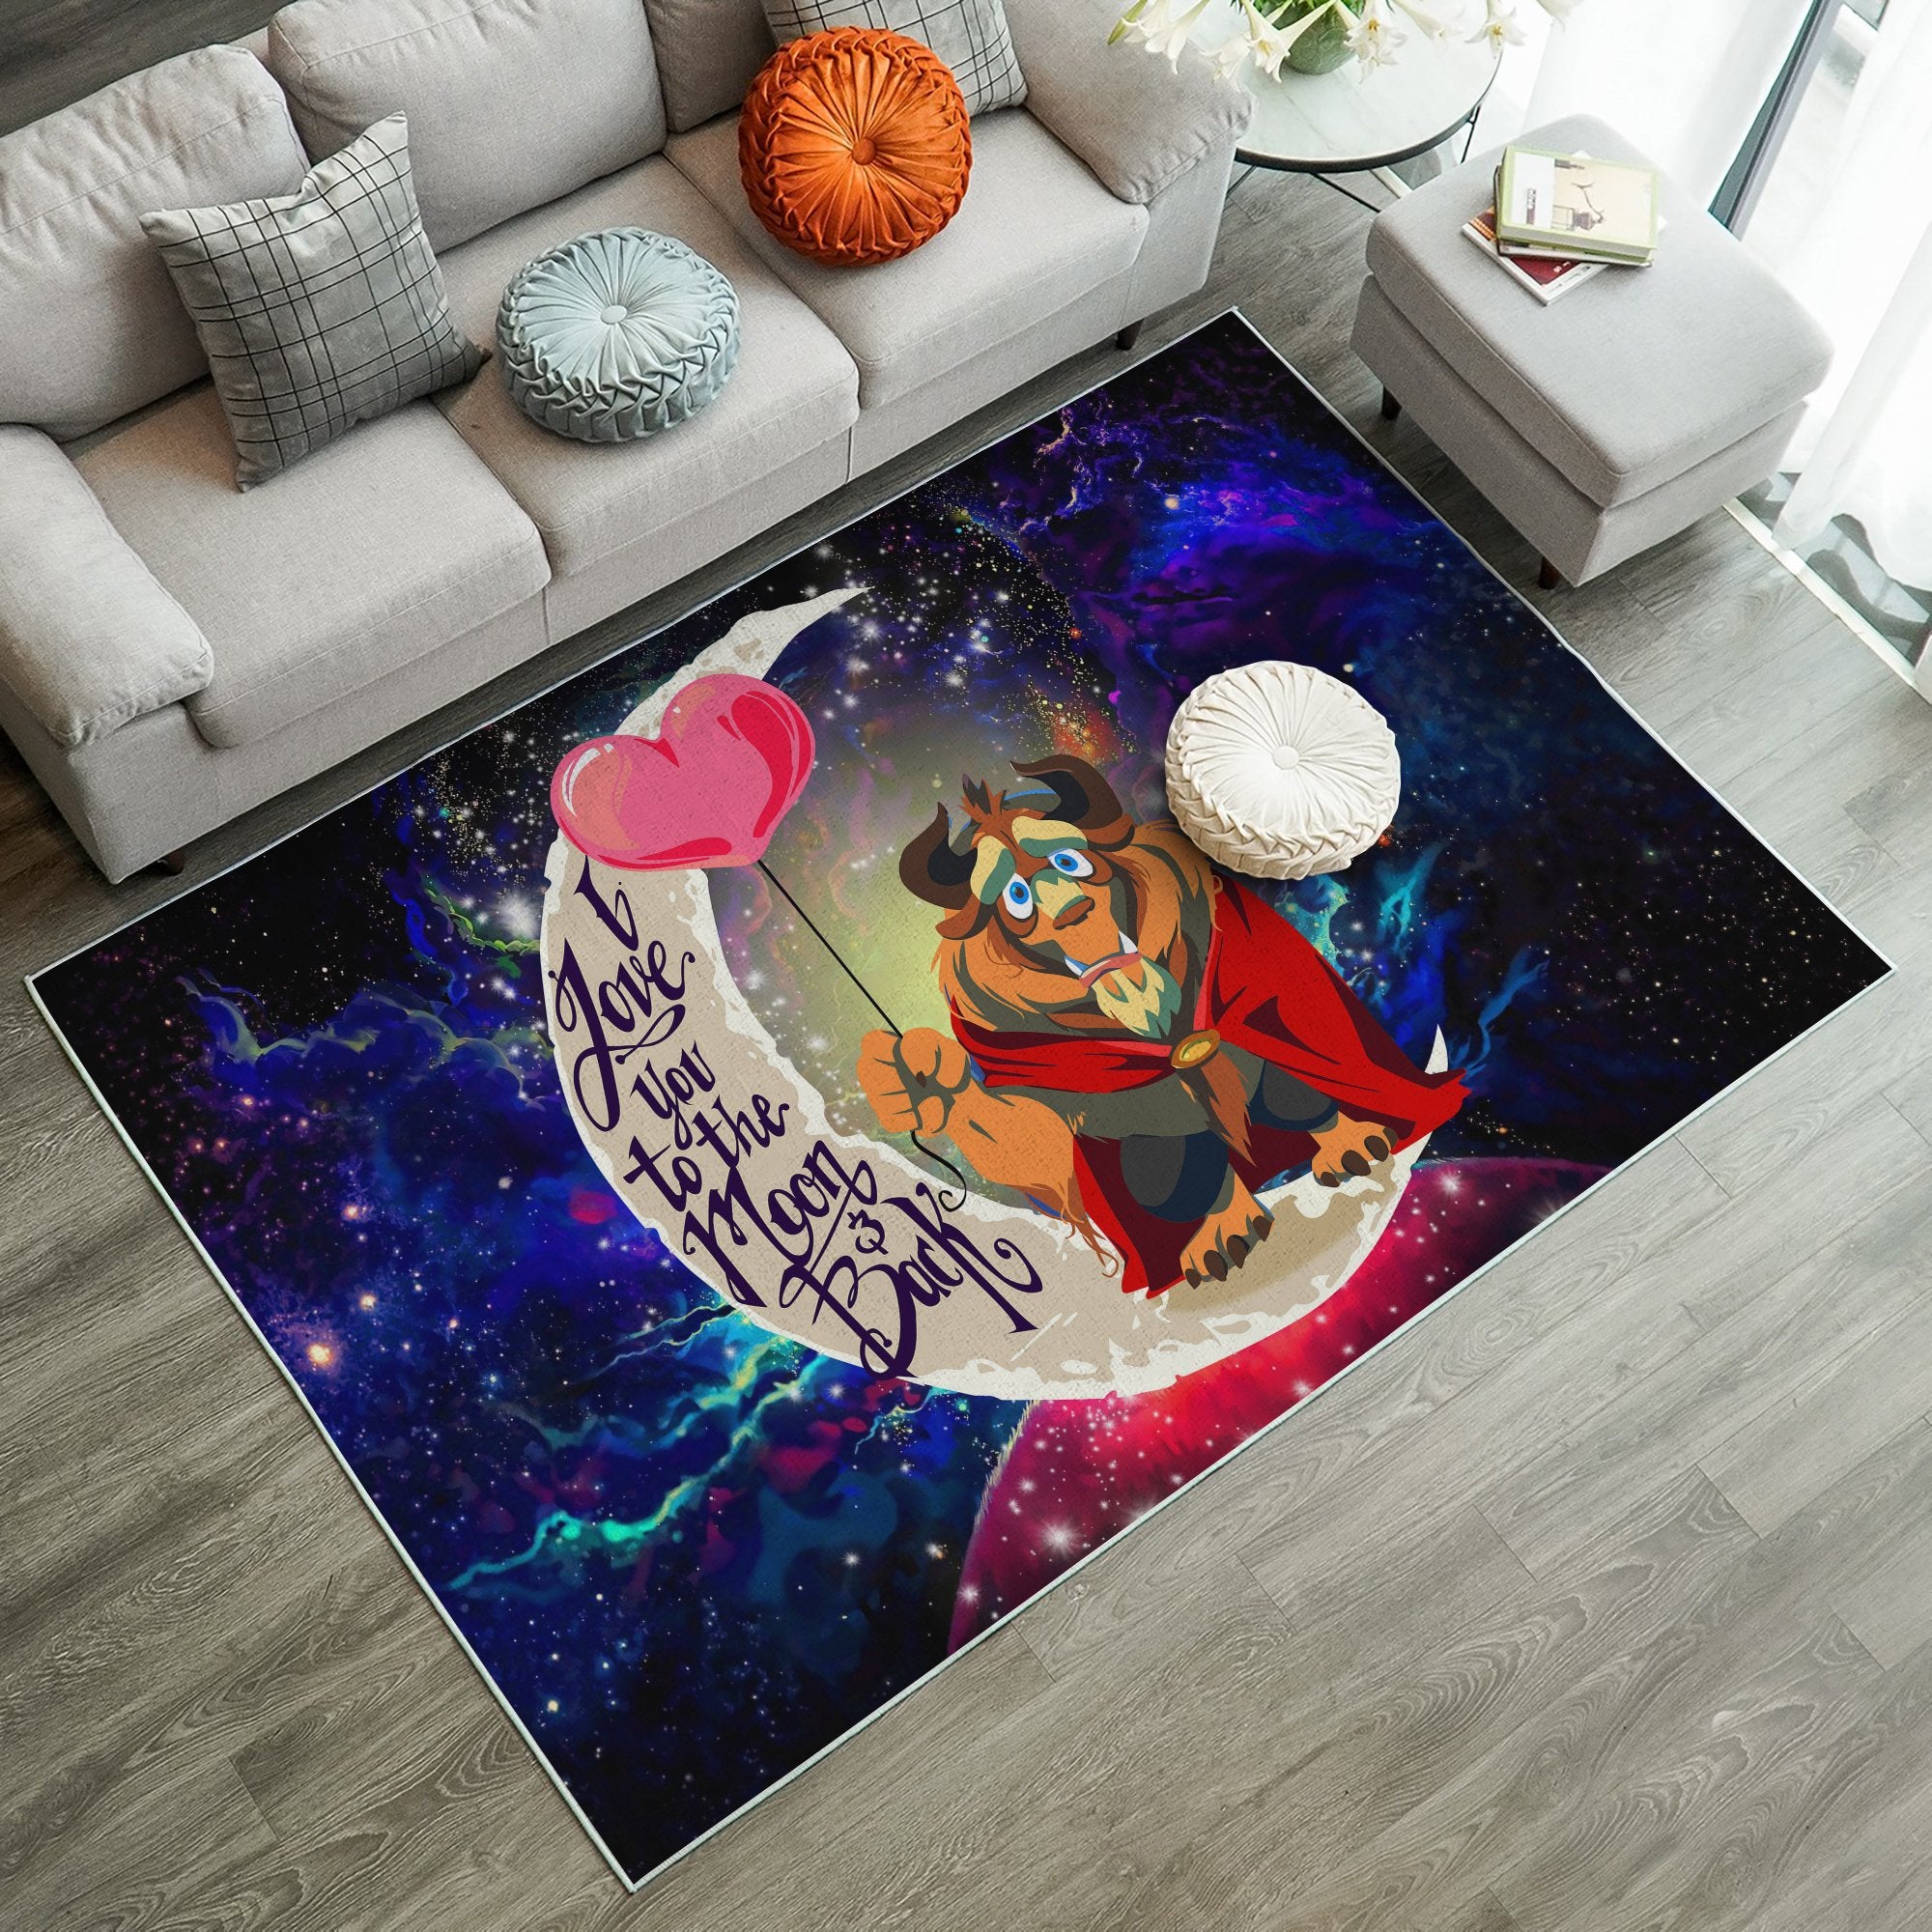 Beauty And The Beast Love You To The Moon Galaxy Carpet Rug Home Room Decor Nearkii